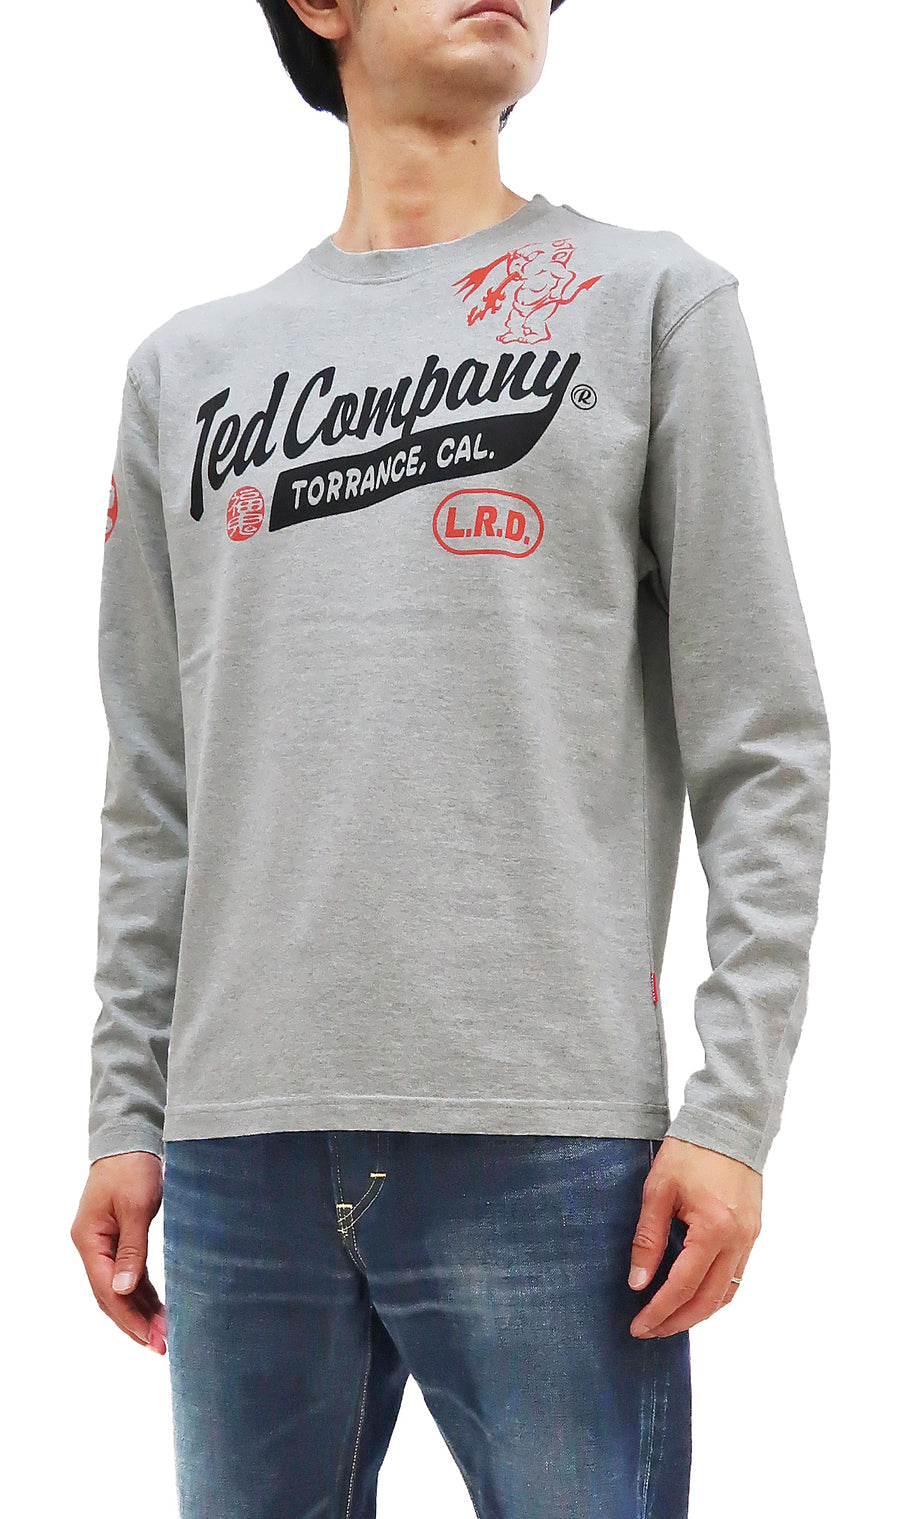 Tedman T-Shirt Men's Lucky Devil Logo Graphic Long Sleeve Tee Efu-Shokai TDLS-355 Ash-Gray